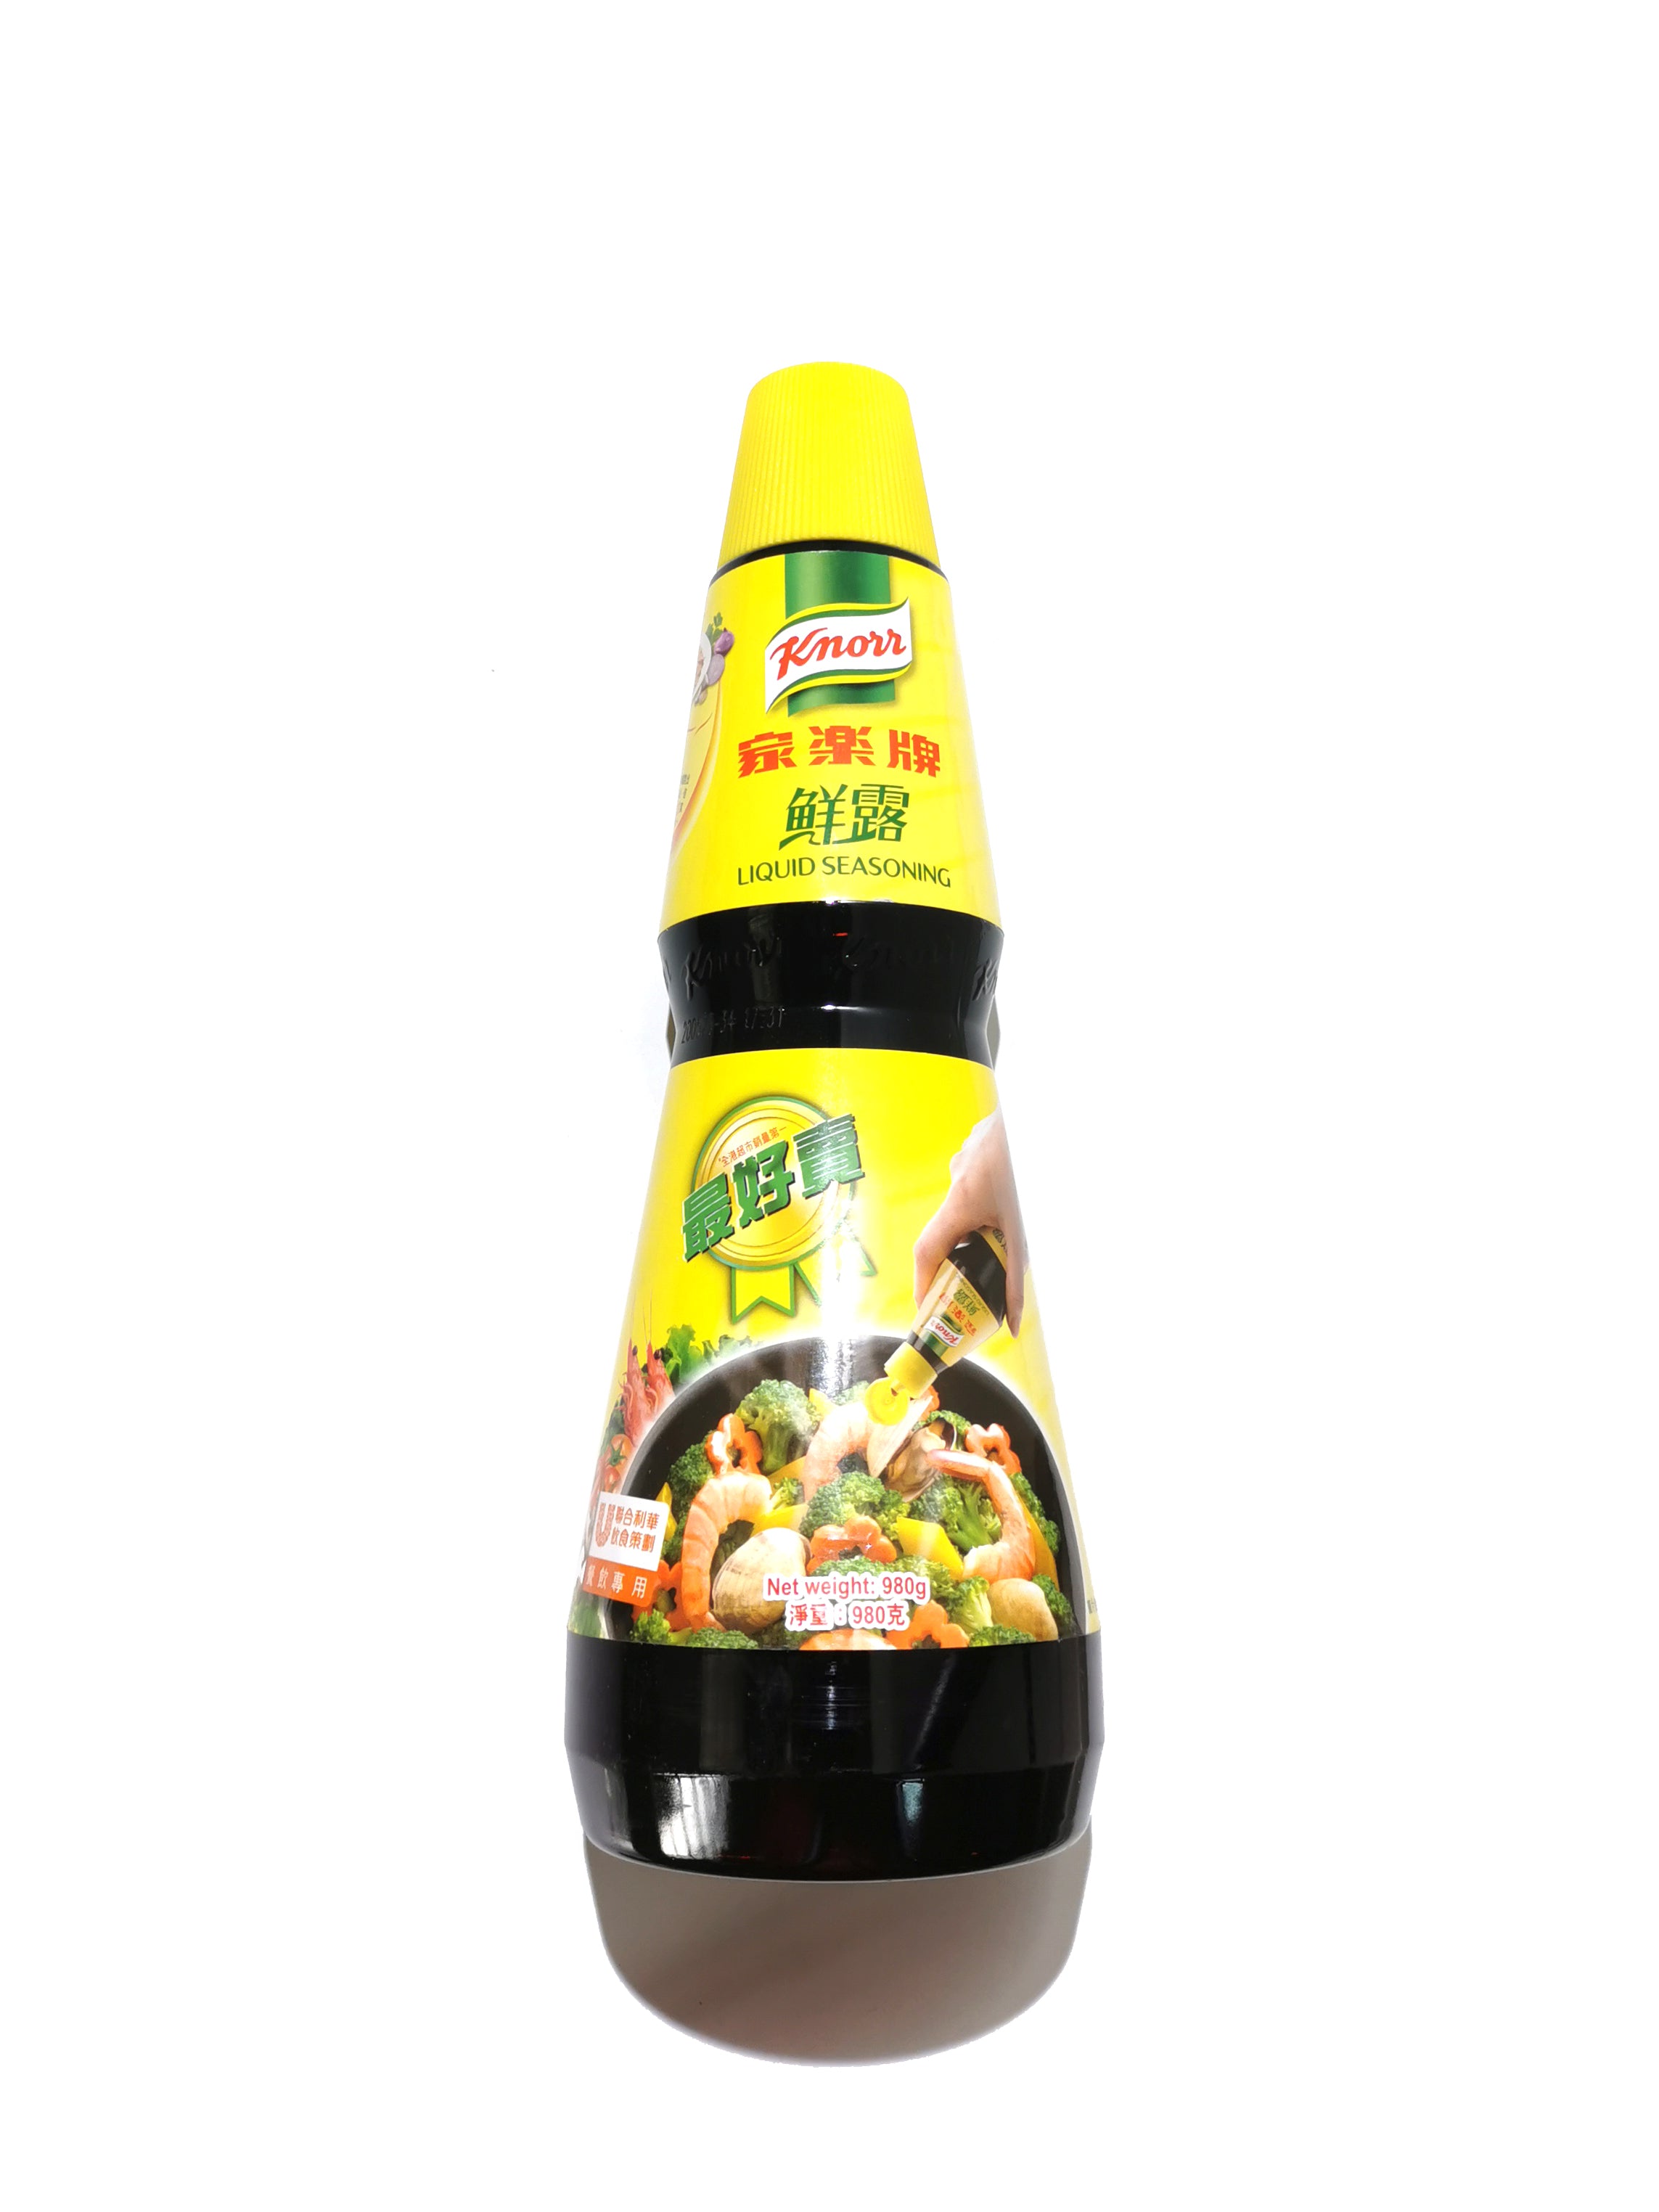 Knorr Liquid Seasoning 家樂牌鮮露 - 980g